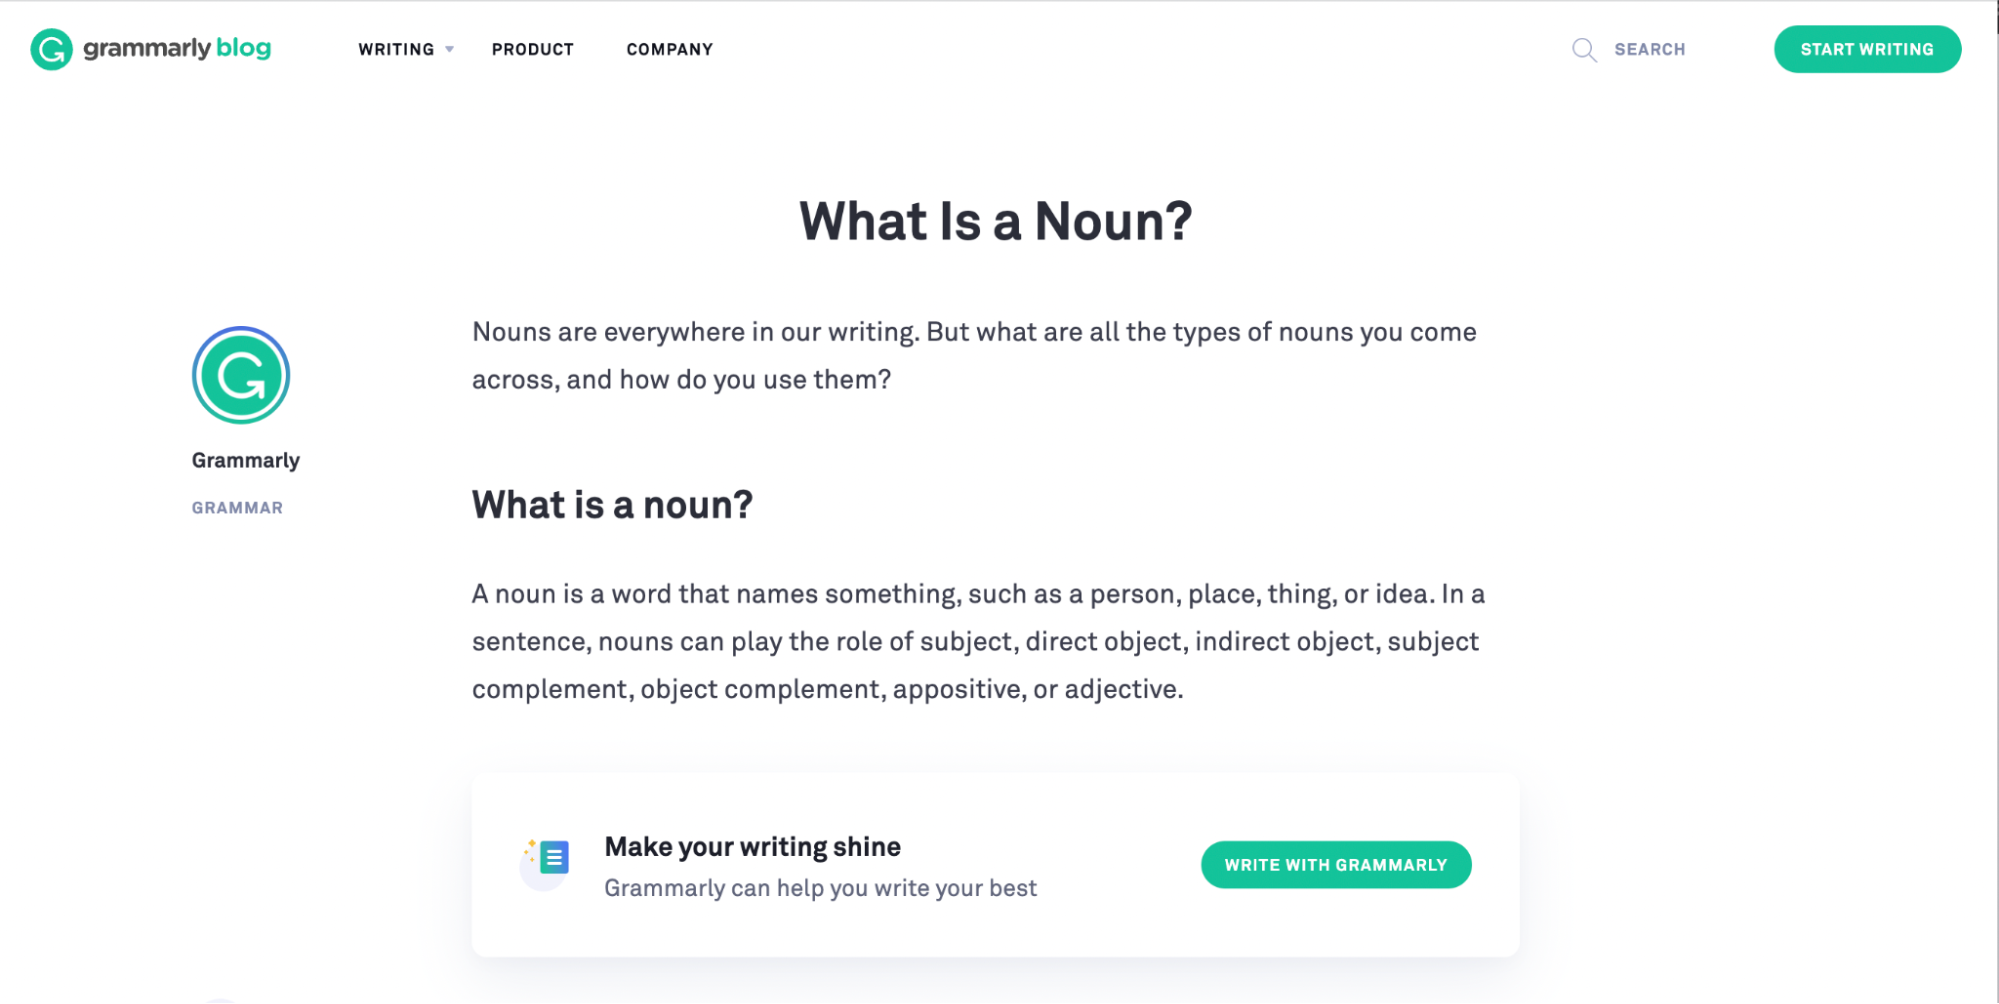 Grammarly blog What Is a Noun